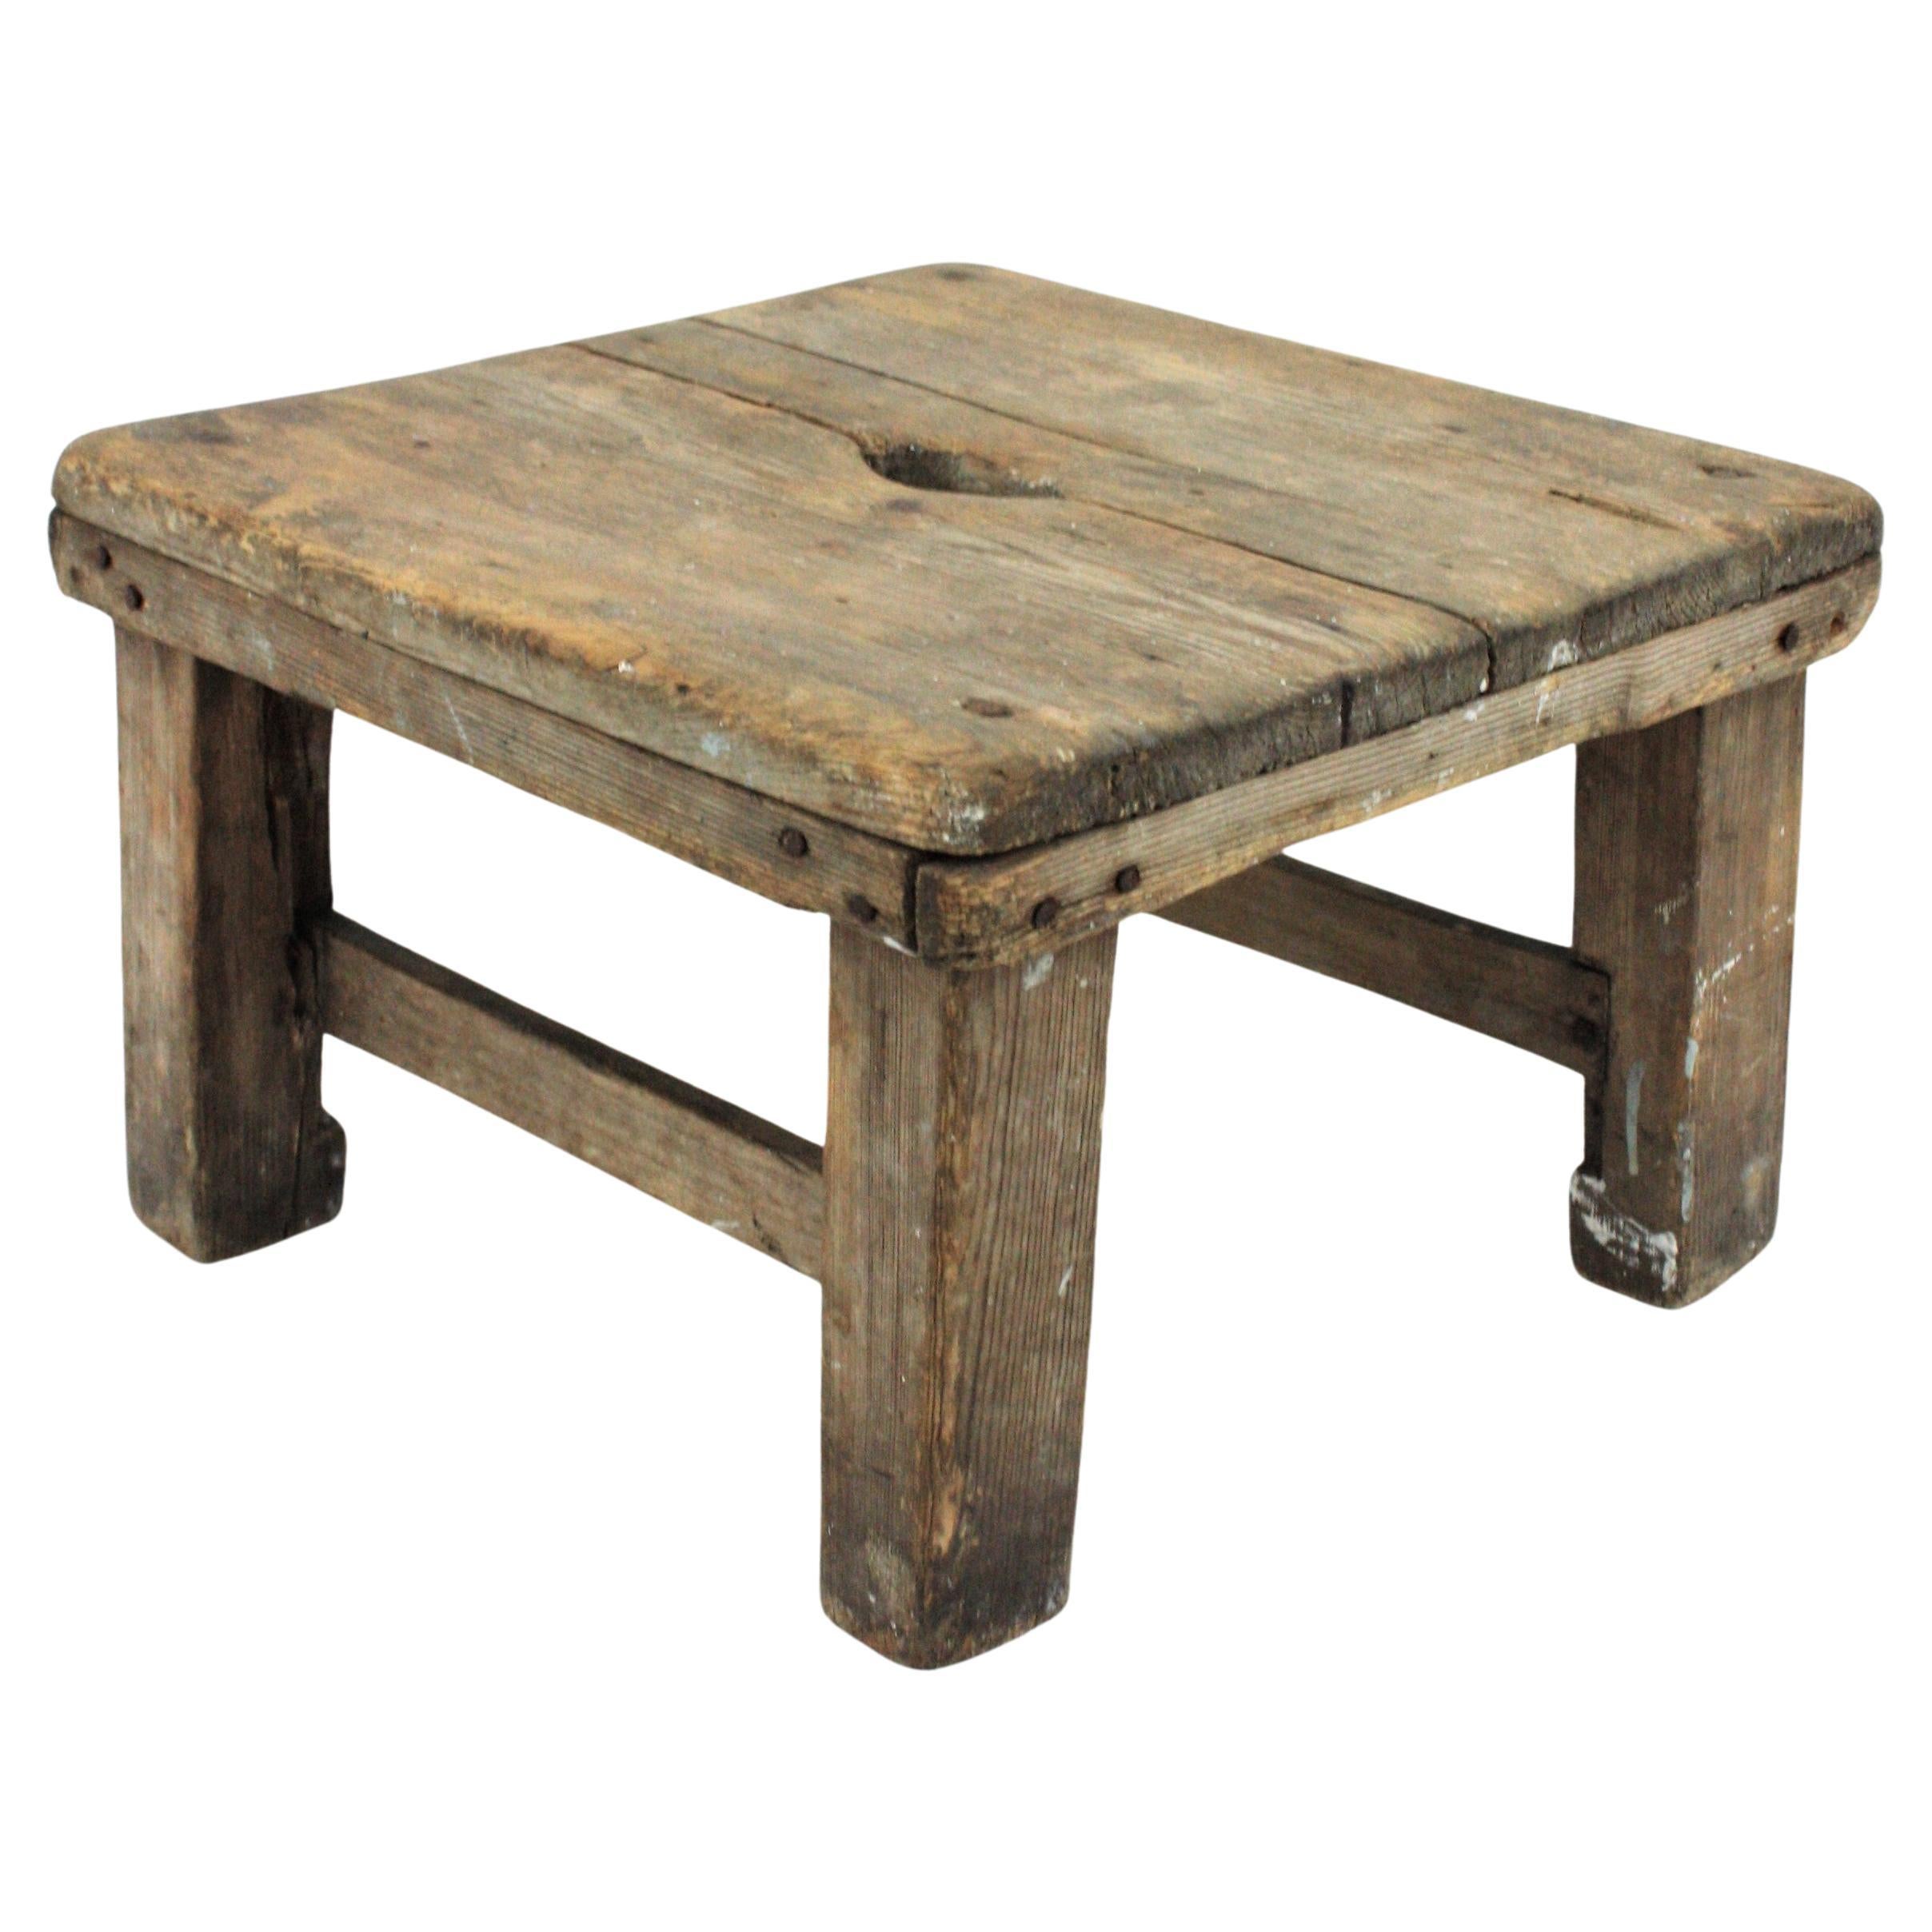 Rustic Workshop Wooden Pedestal Stand or Stool